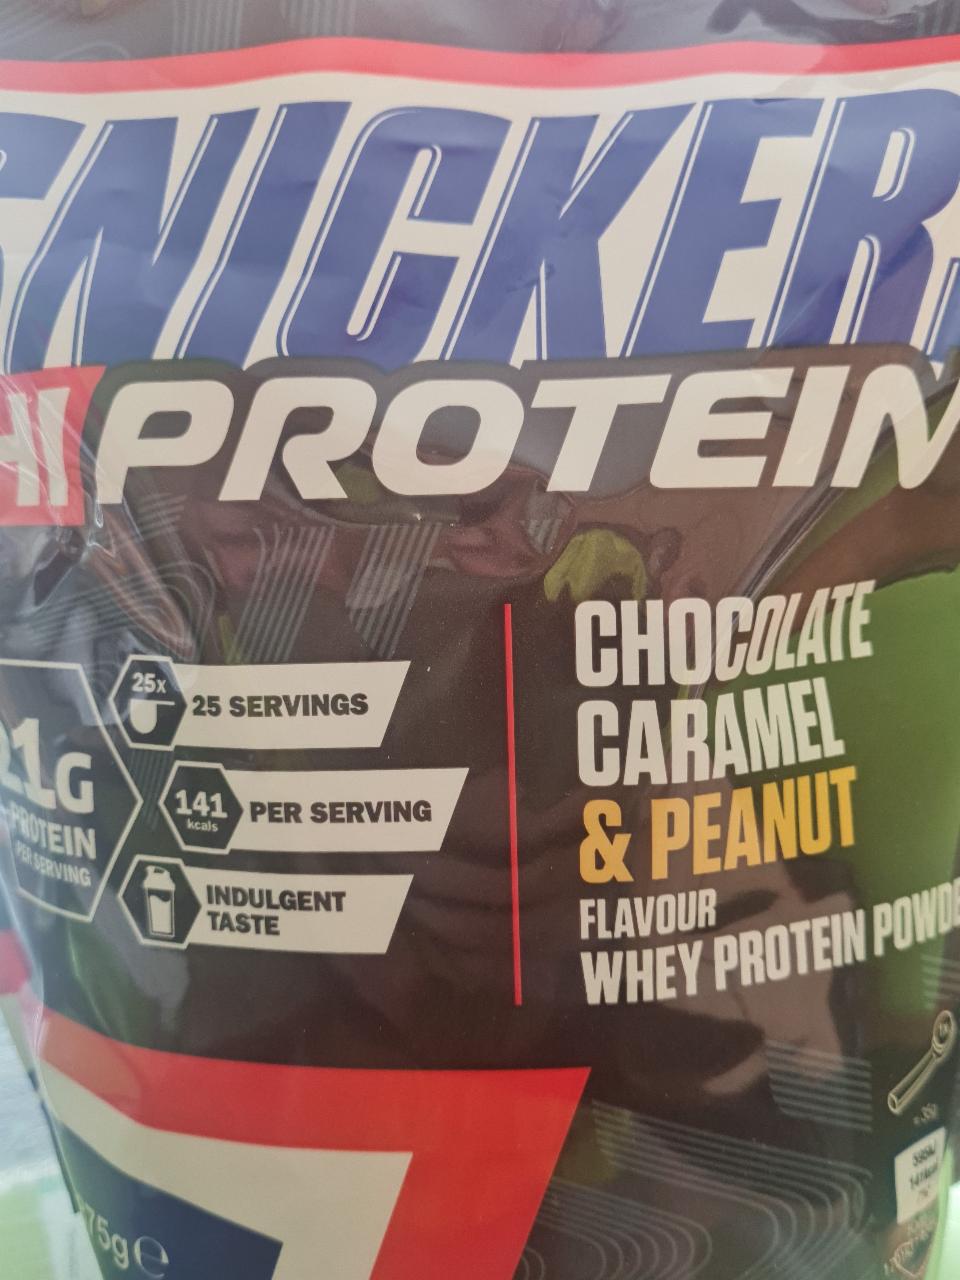 Fotografie - Snickers HiProtein chocolate caramel & peanut flavour whey protein powder